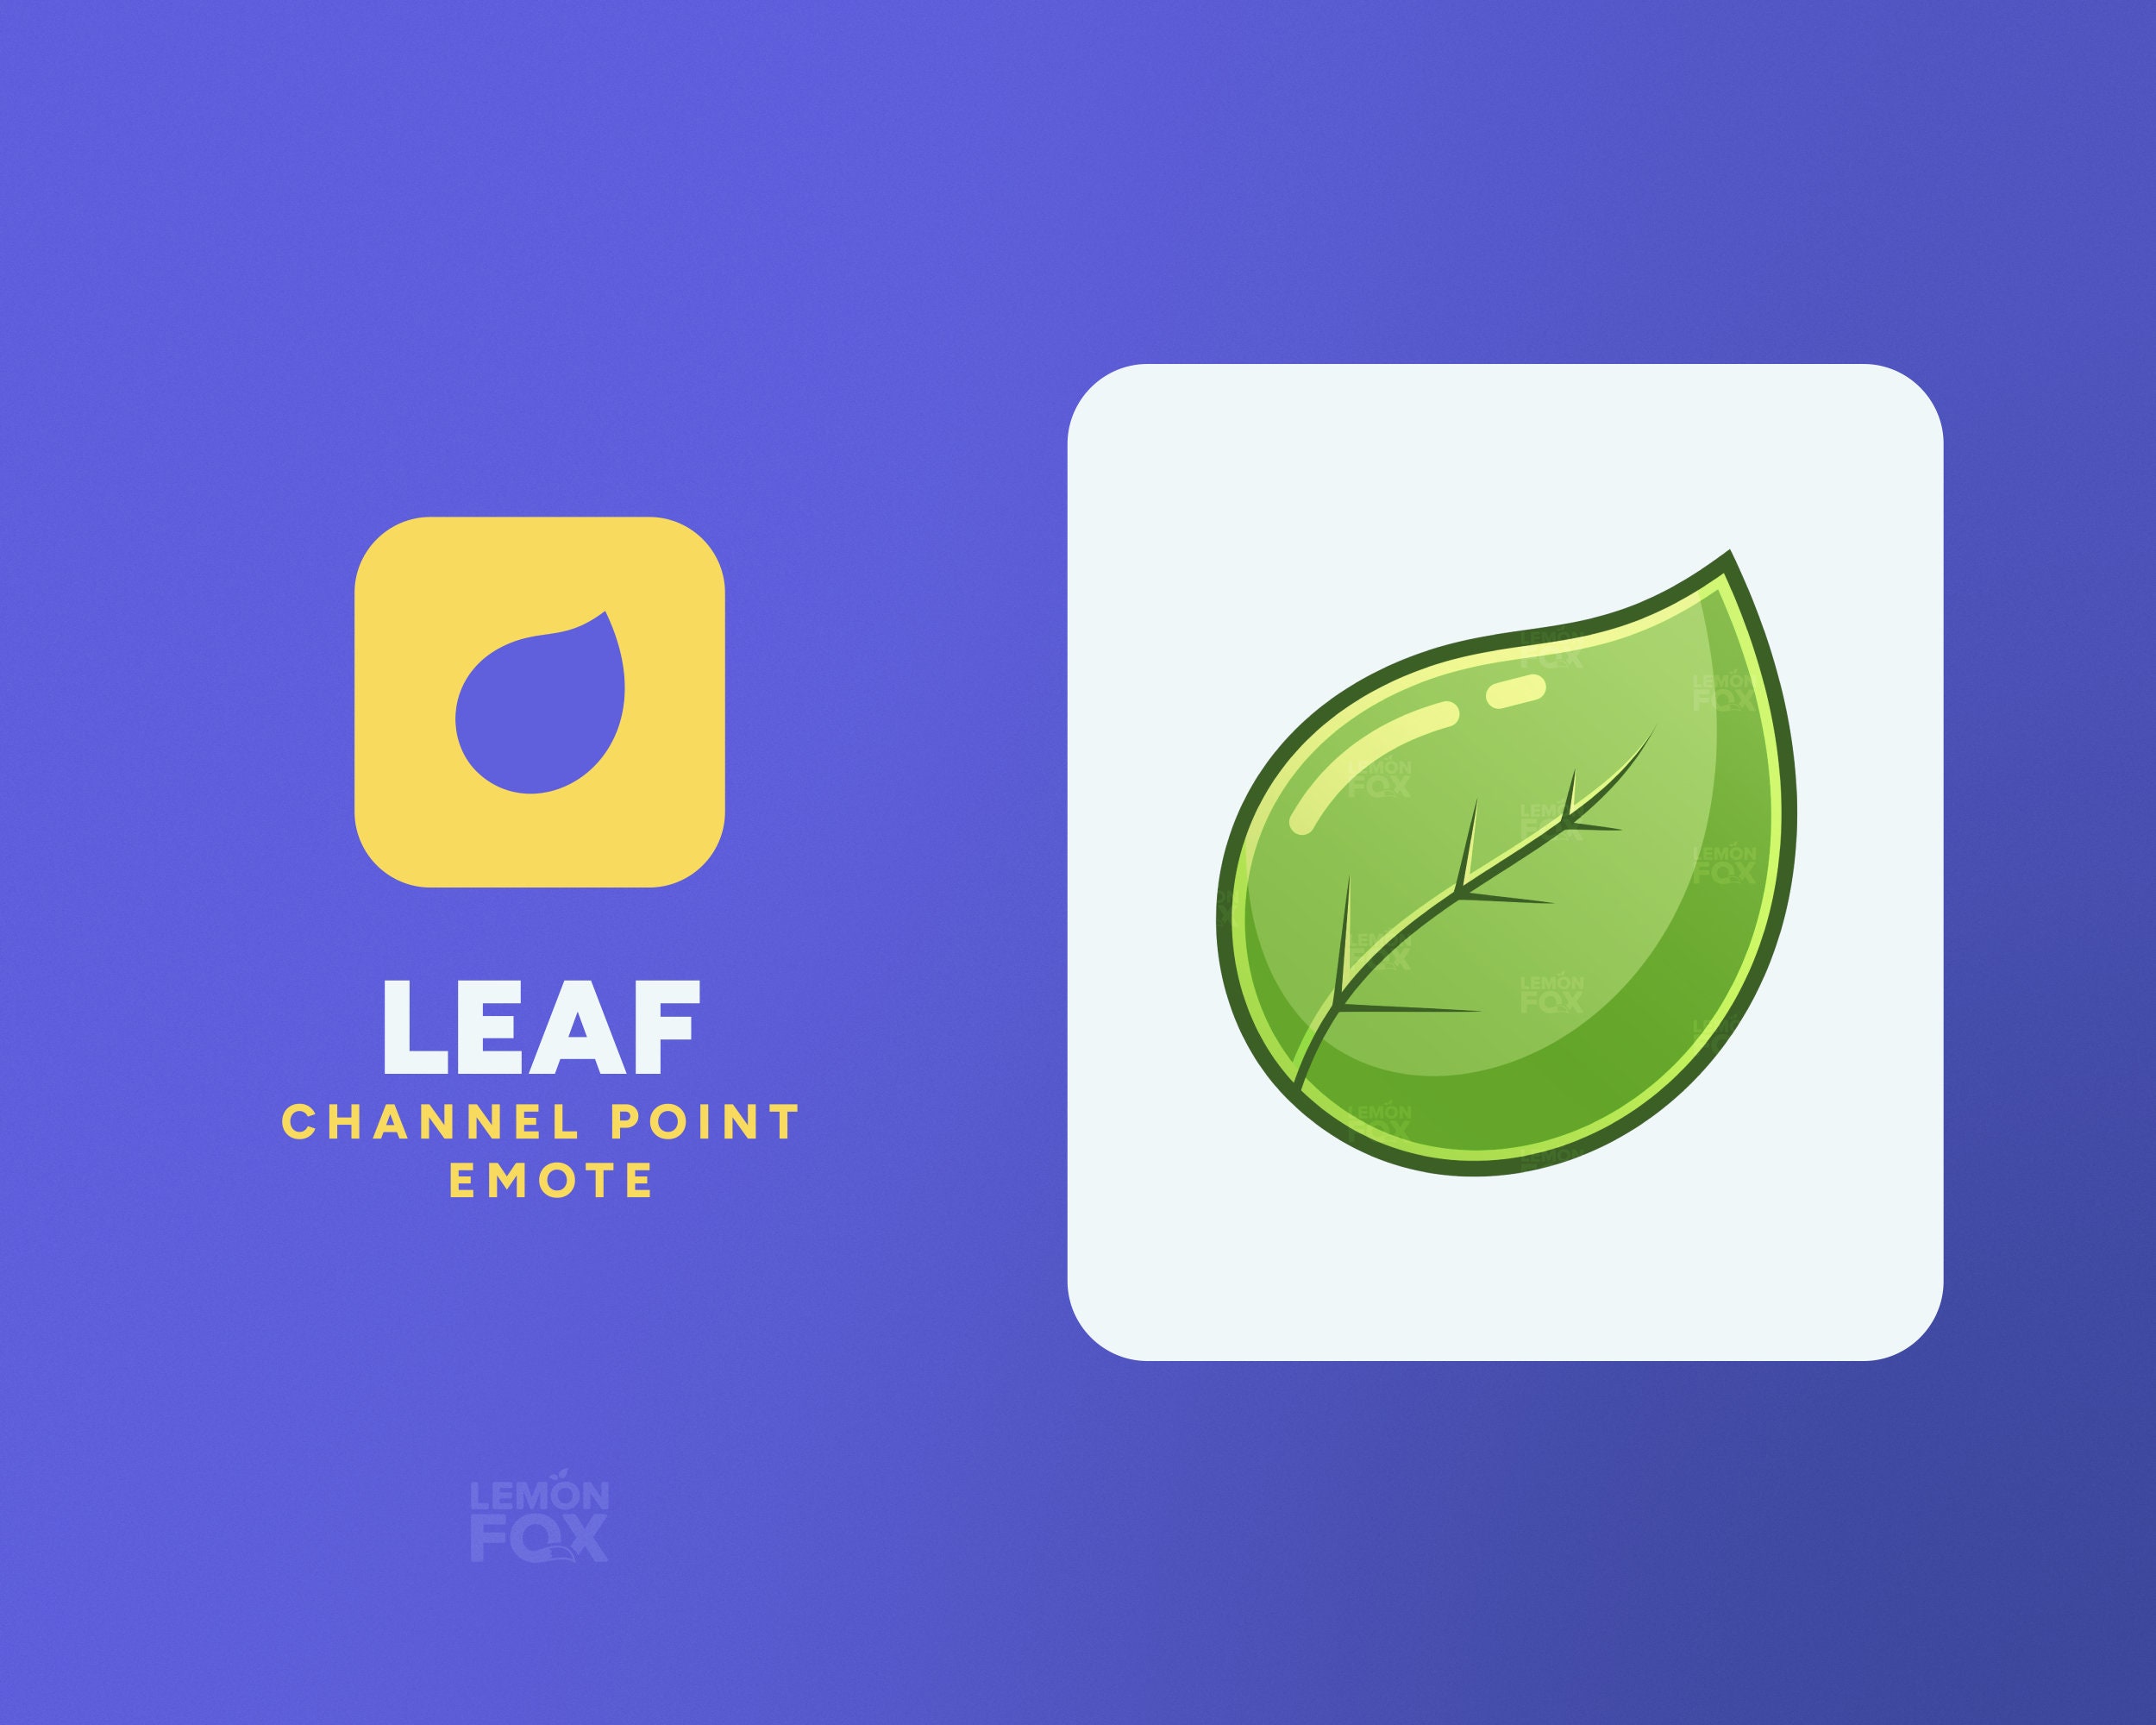 Mint Leaves (1 bunch) – O'leaf